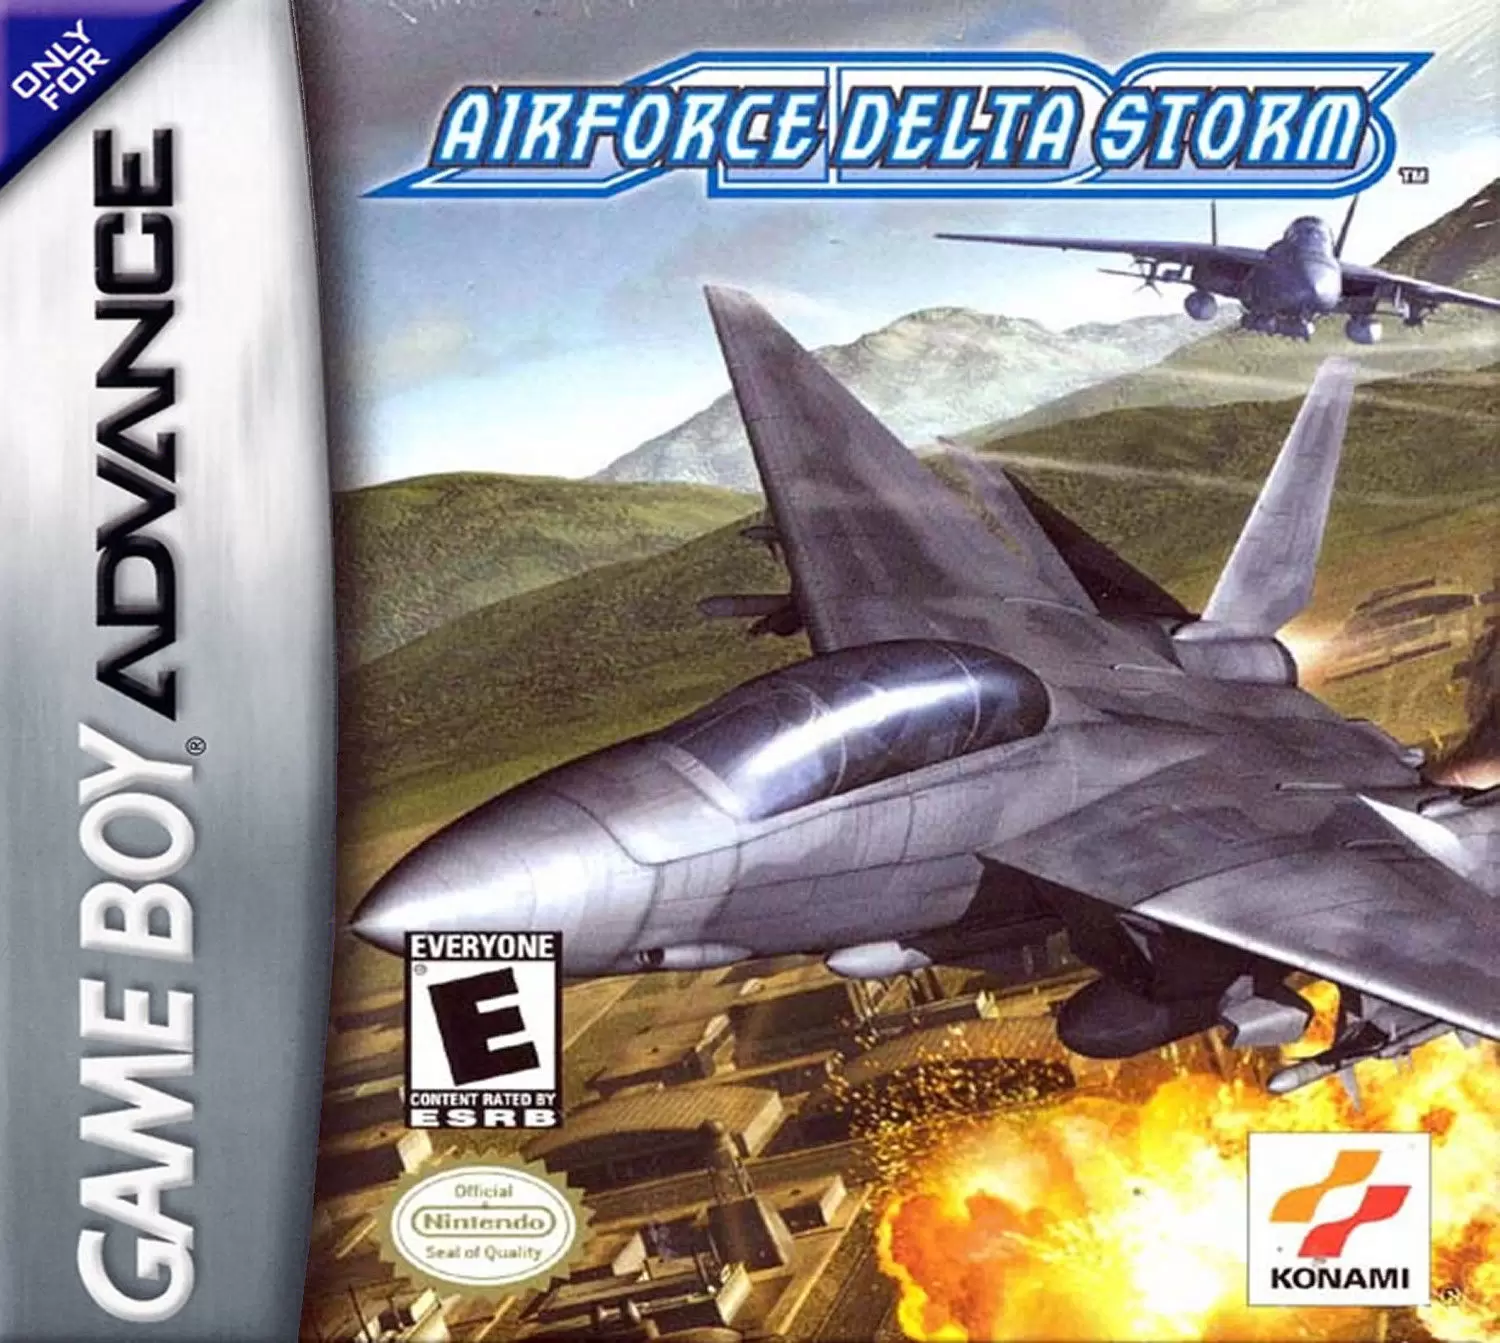 Game Boy Advance Games - AirForce Delta Storm